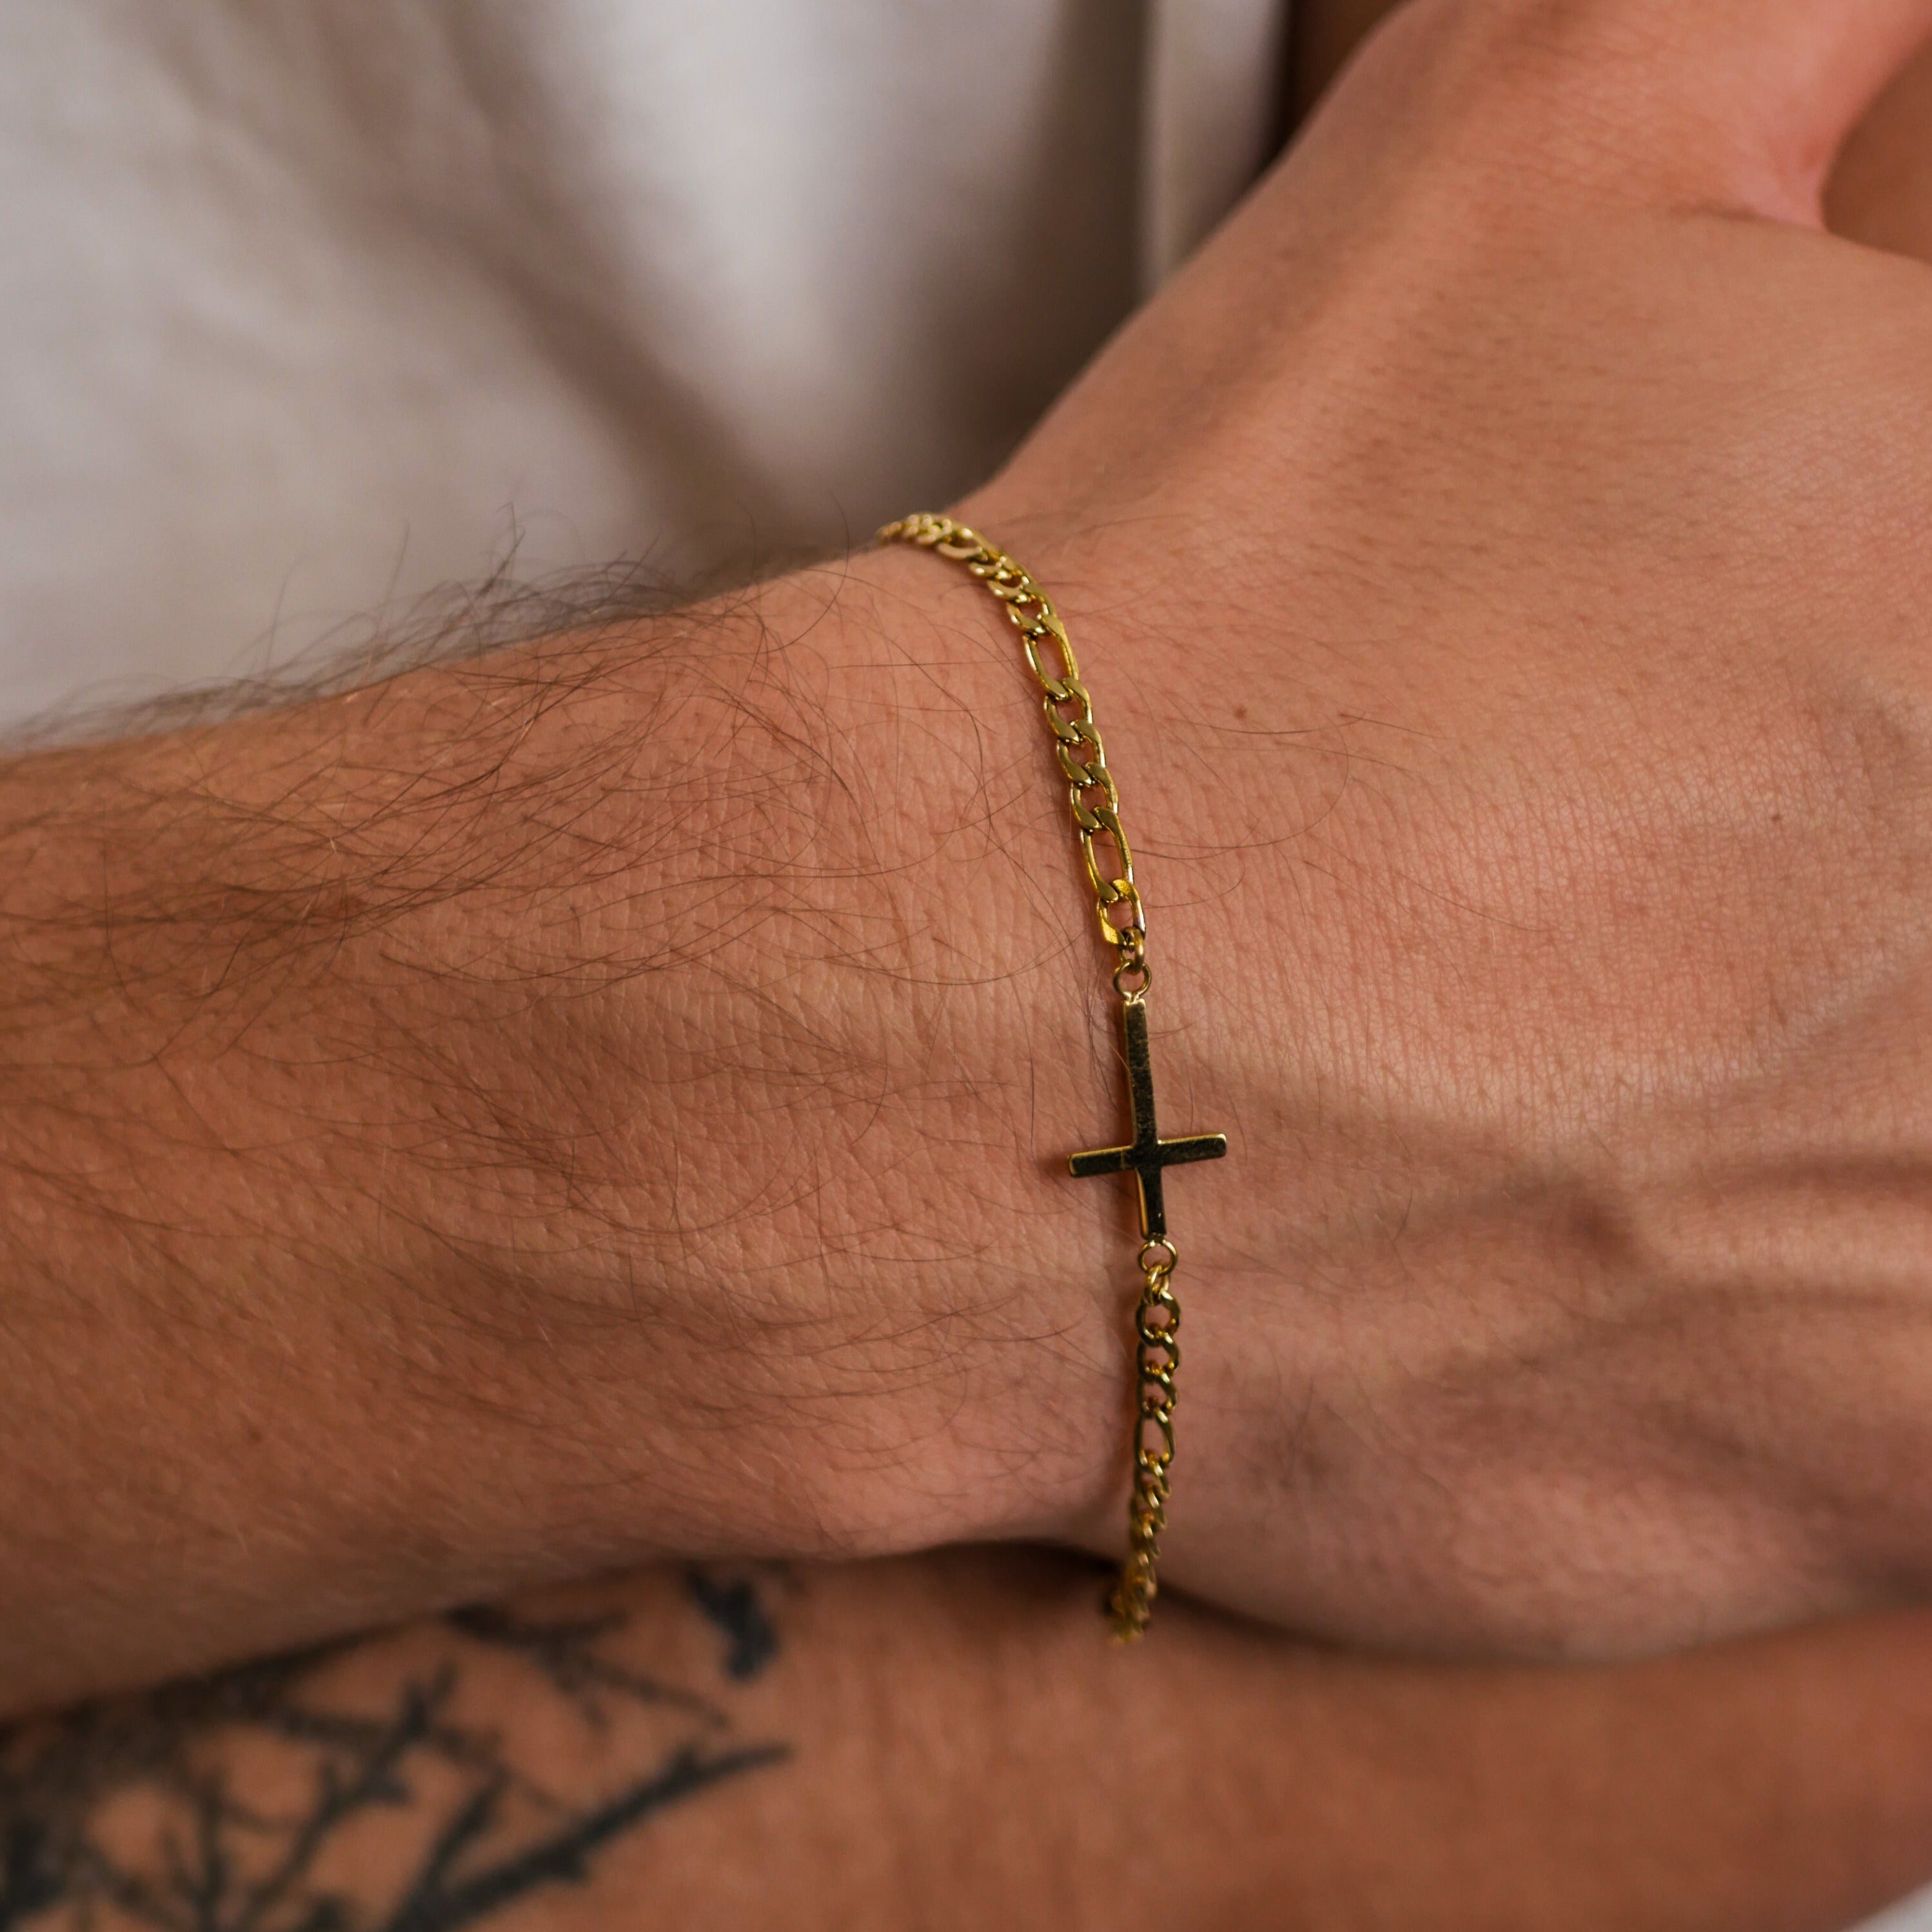 NL Antique Cross bracelet - Gold-toned